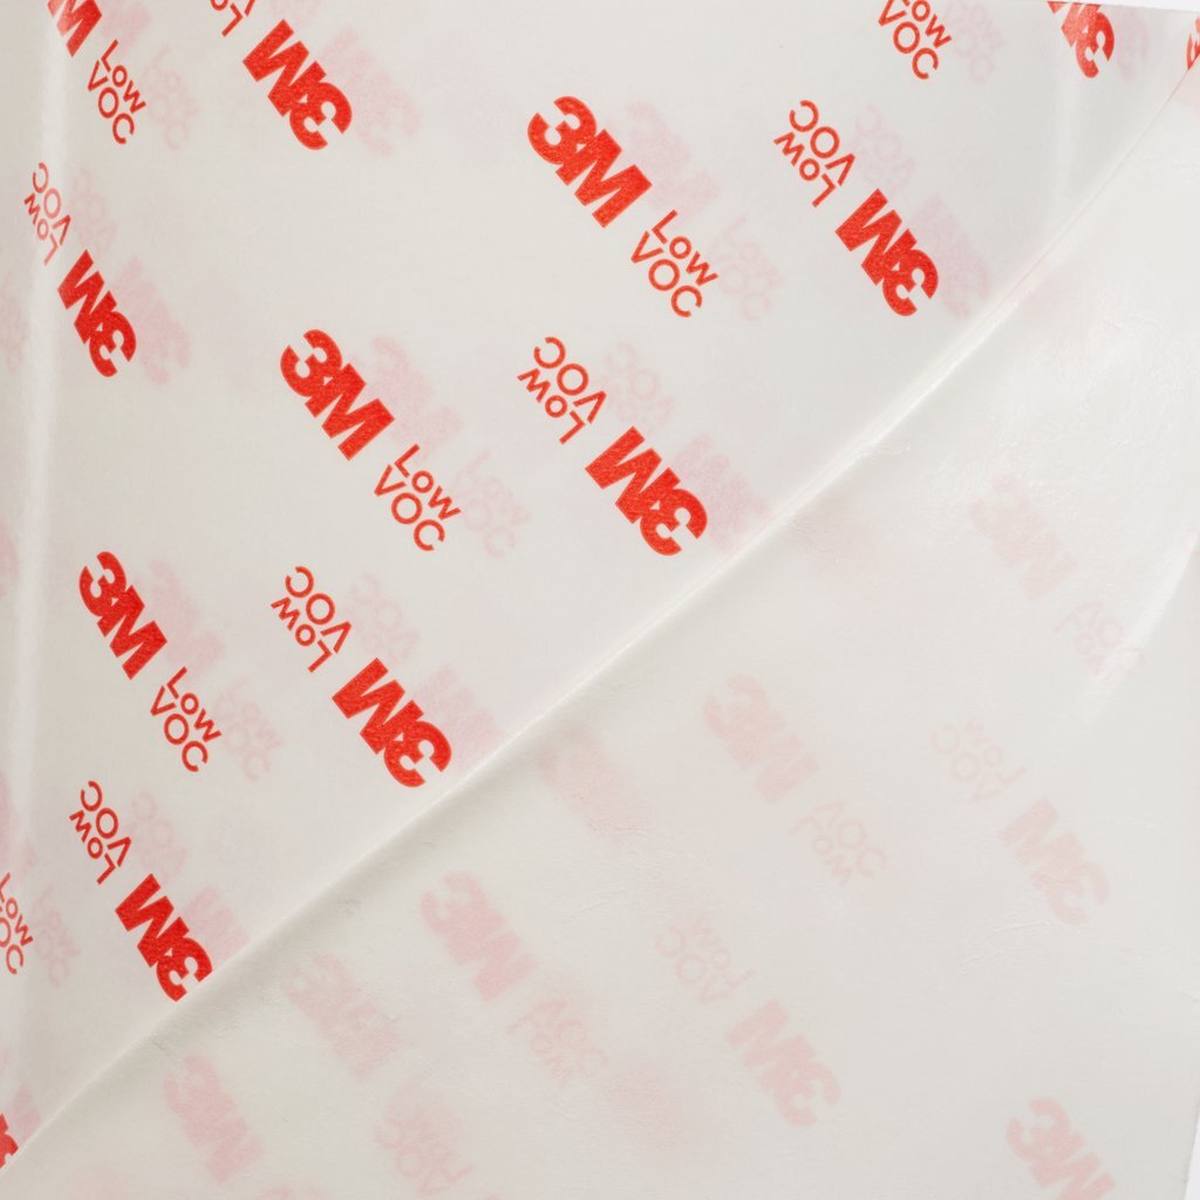 3M Dubbelzijdig plakband met vliespapier als achterkant 99015LVC, wit, 12 mm x 50 m, 0,15 mm